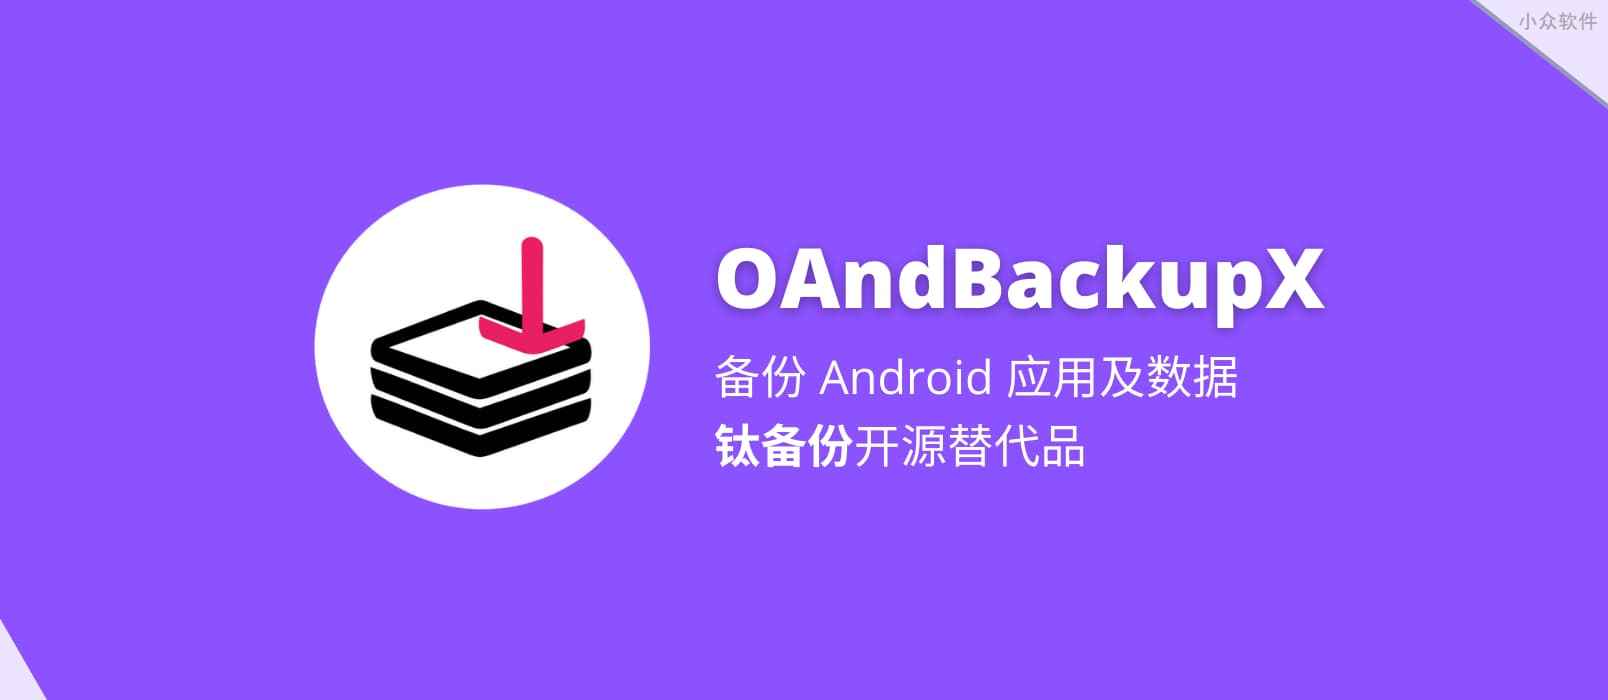 OAndBackupX – 钛备份开源替代品，Android 应用数据备份与恢复工具